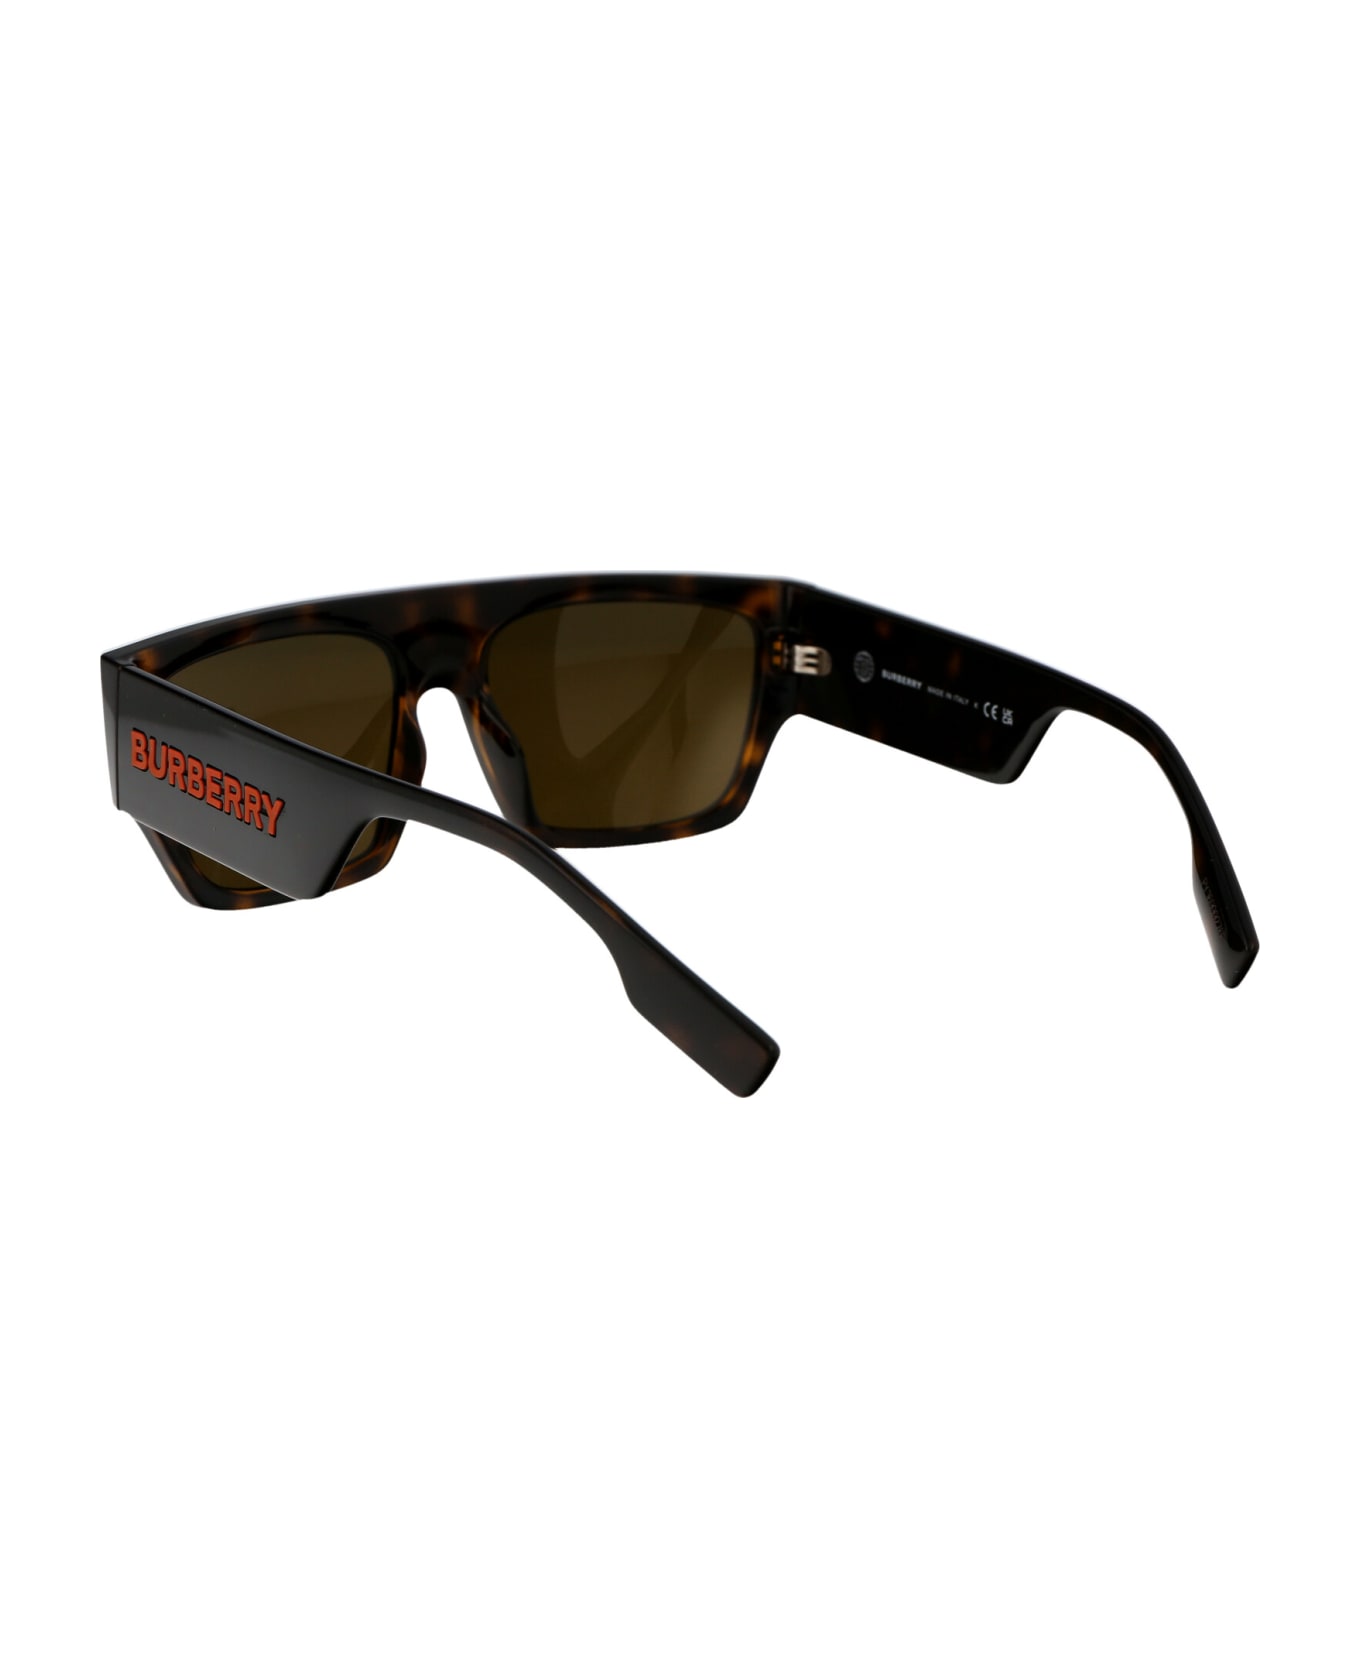 Burberry Eyewear Micah Sunglasses - 300273 DARK HAVANA サングラス